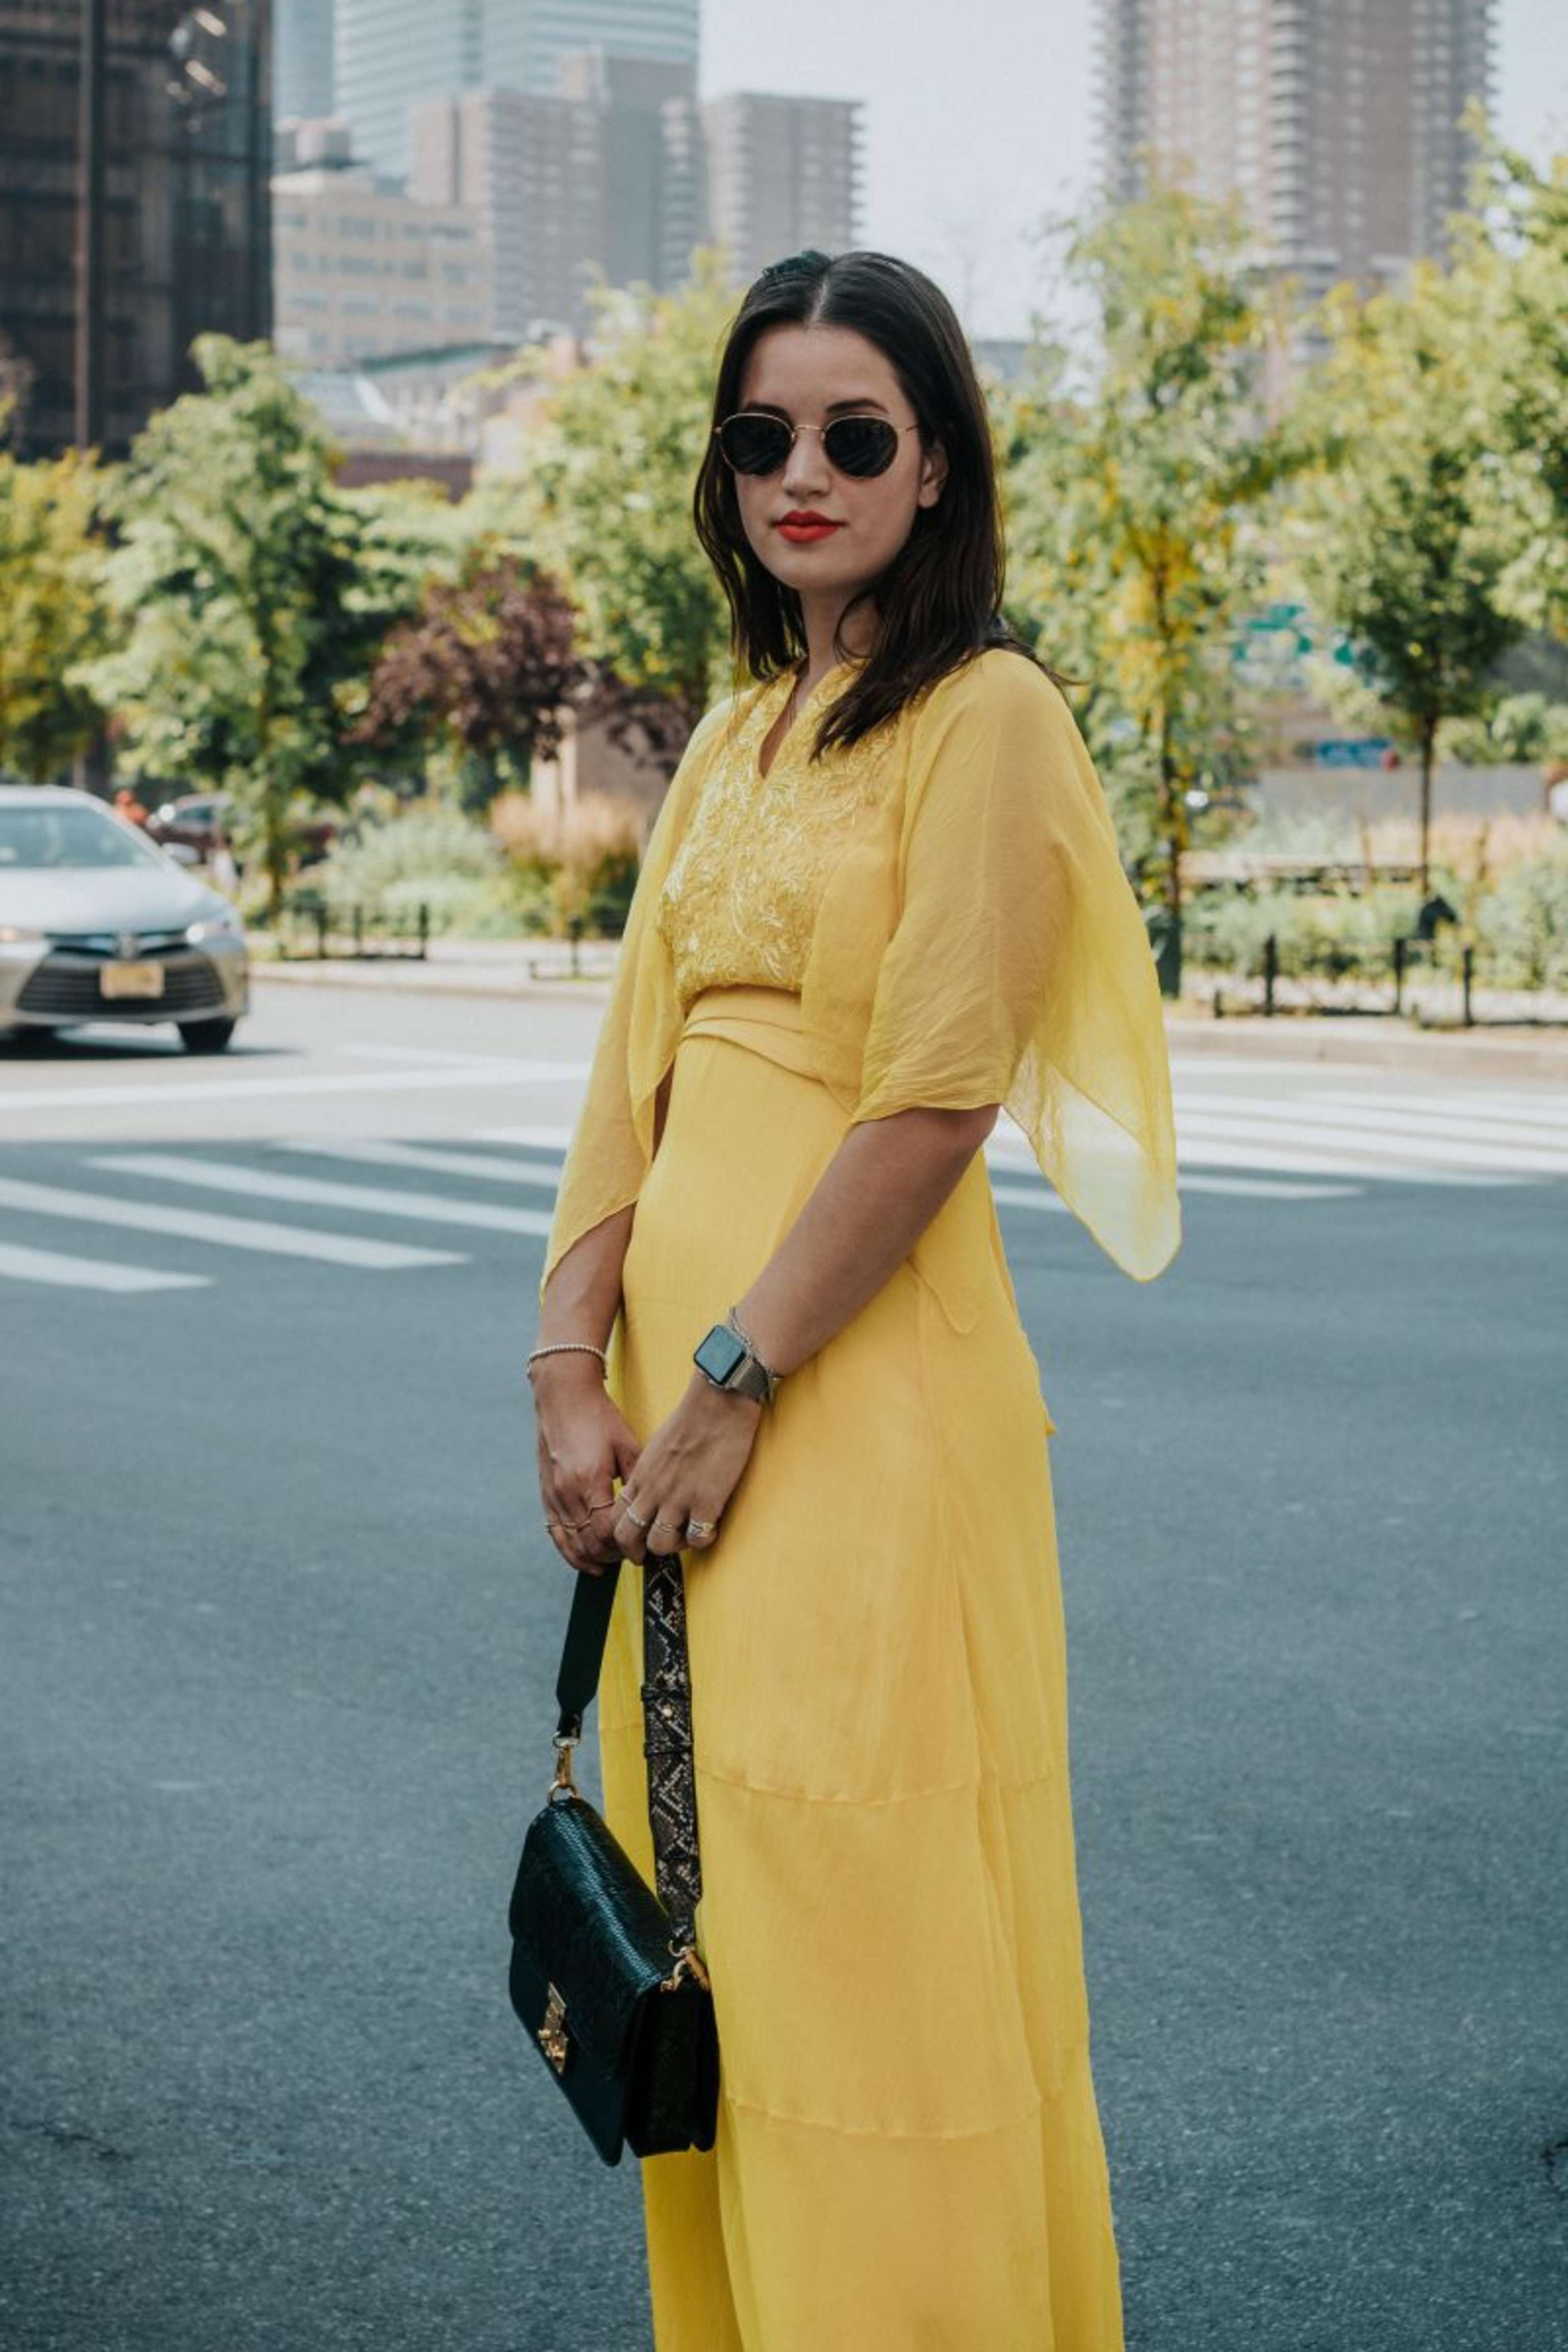 #FlorenNYFW - September 2018 - Look #1: The yellow dress.